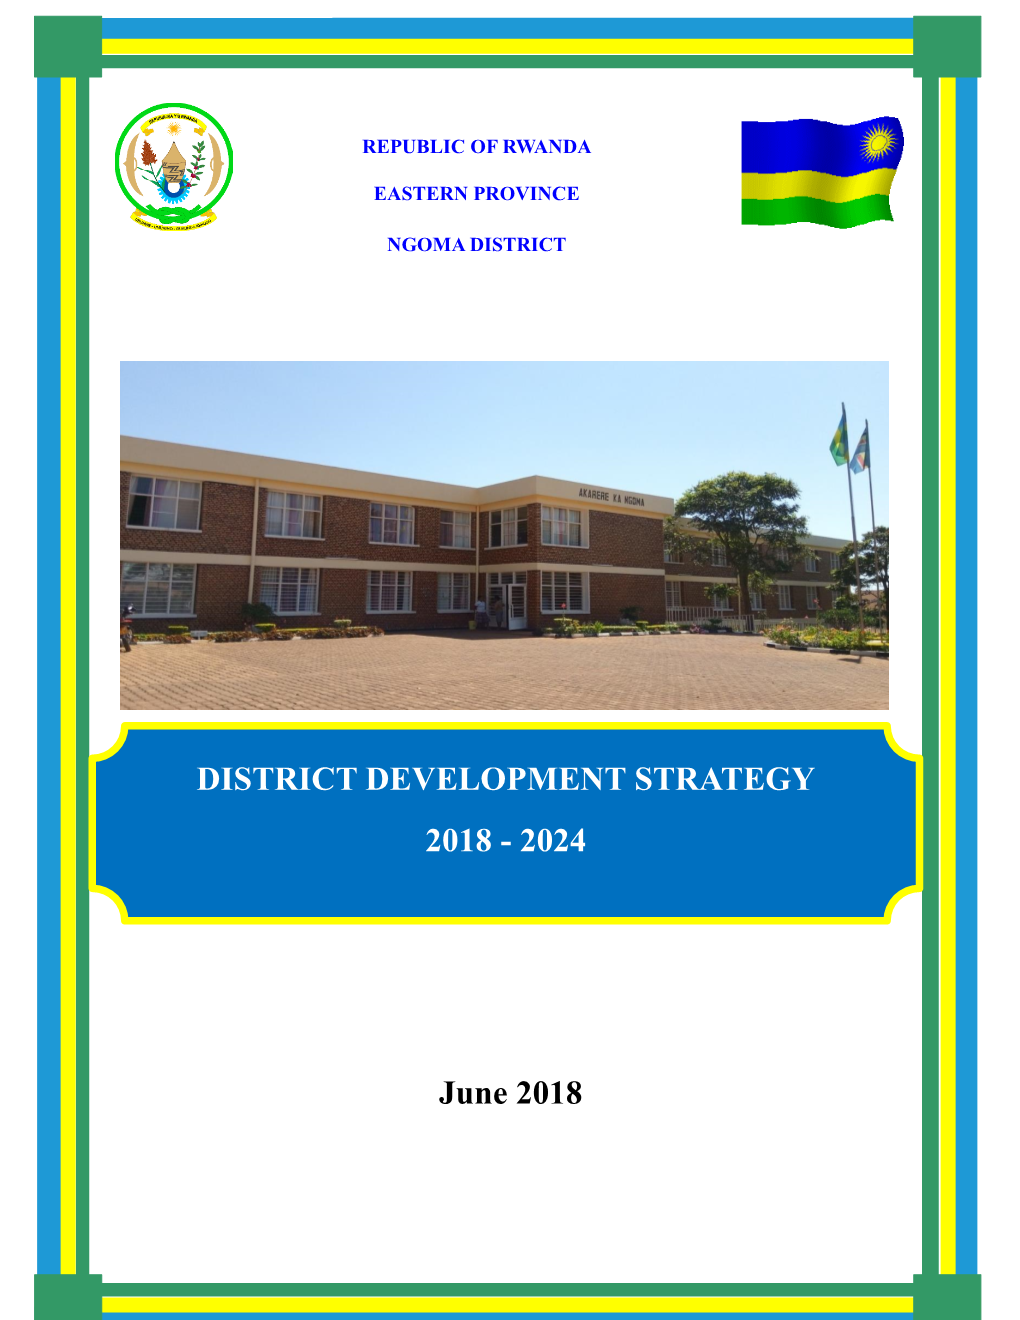 District Development Strategy 2018